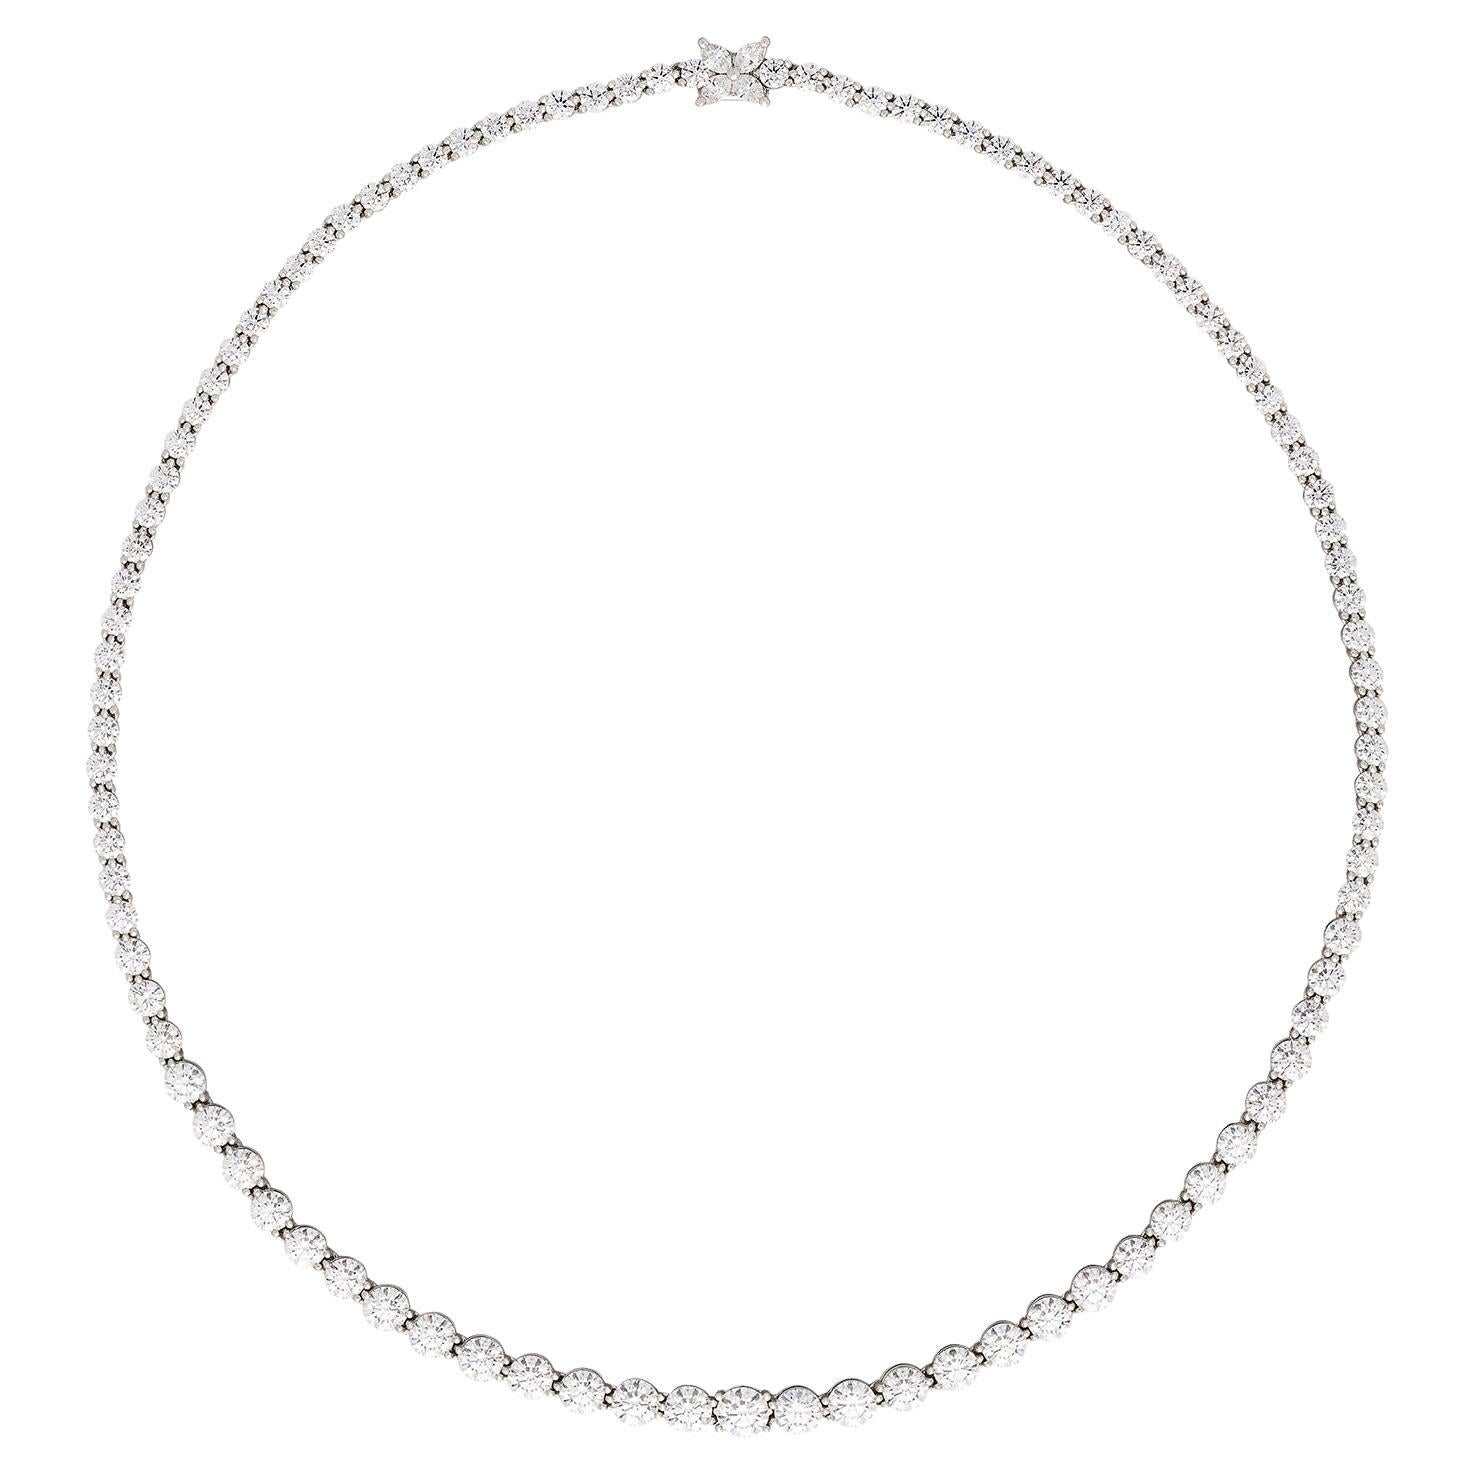 Victoria Diamond Necklace by Tiffany & Co.